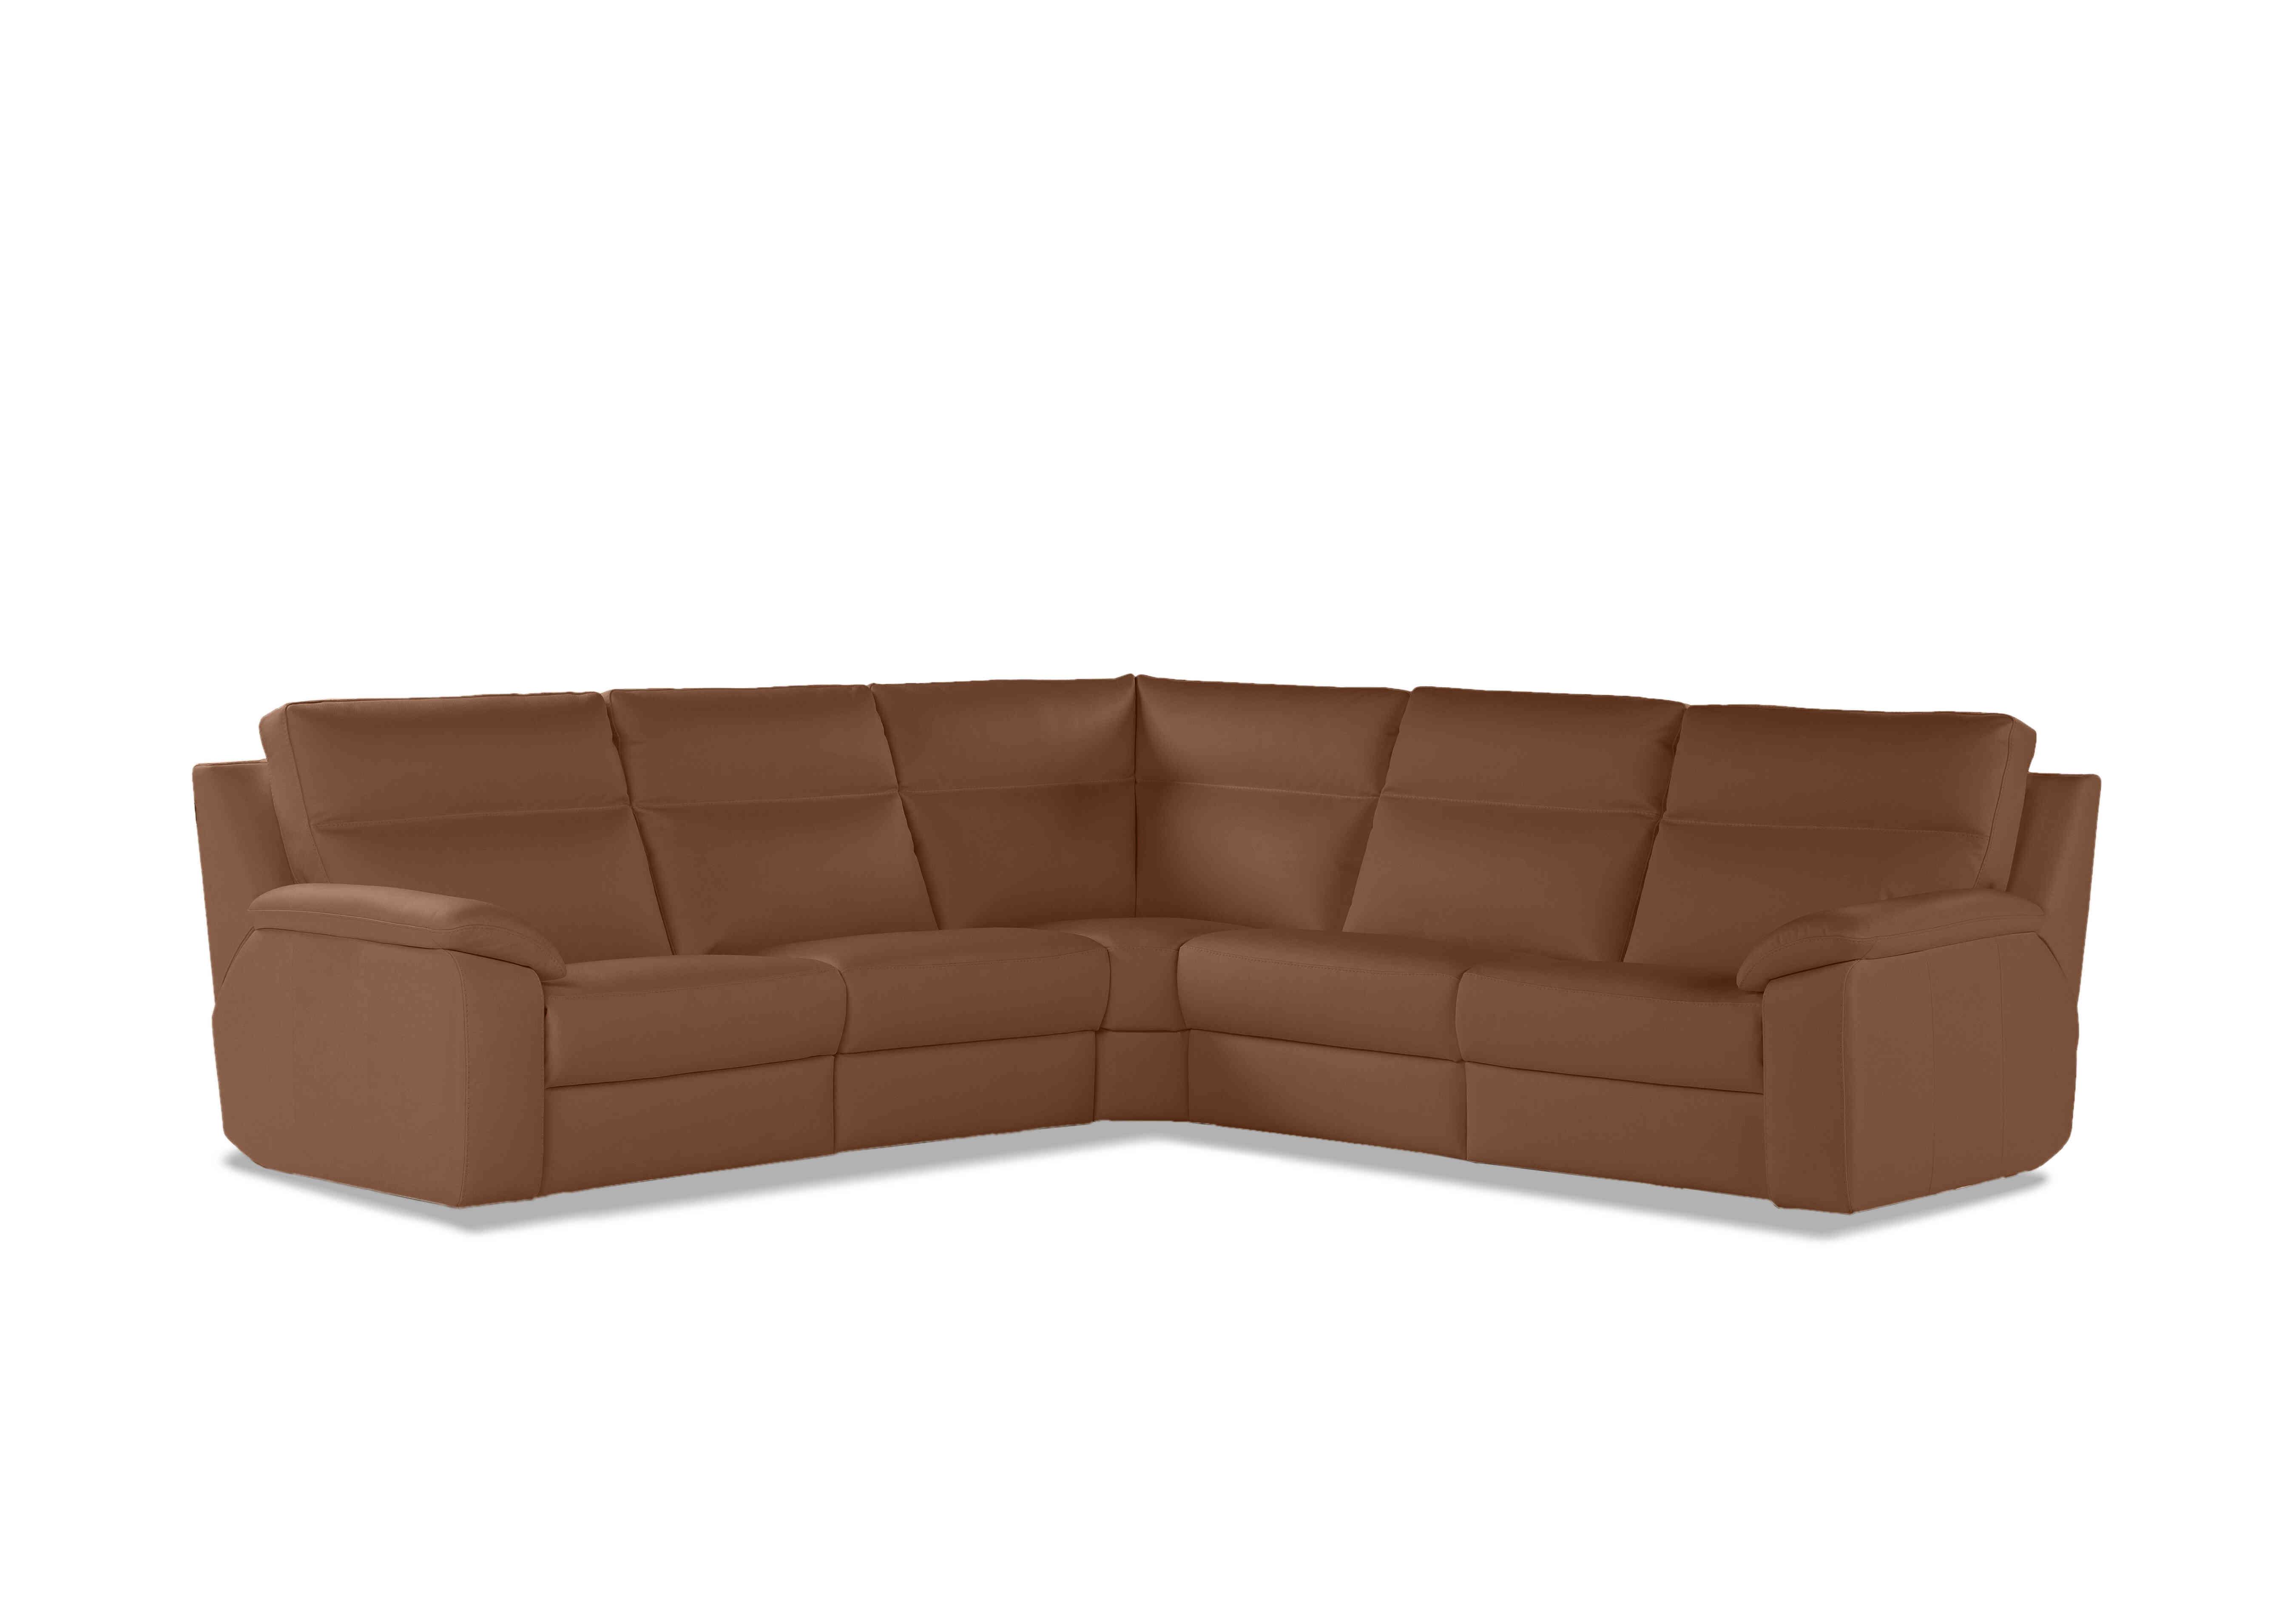 Pepino Large Leather Corner Sofa in 363 Torello Cognac on Furniture Village